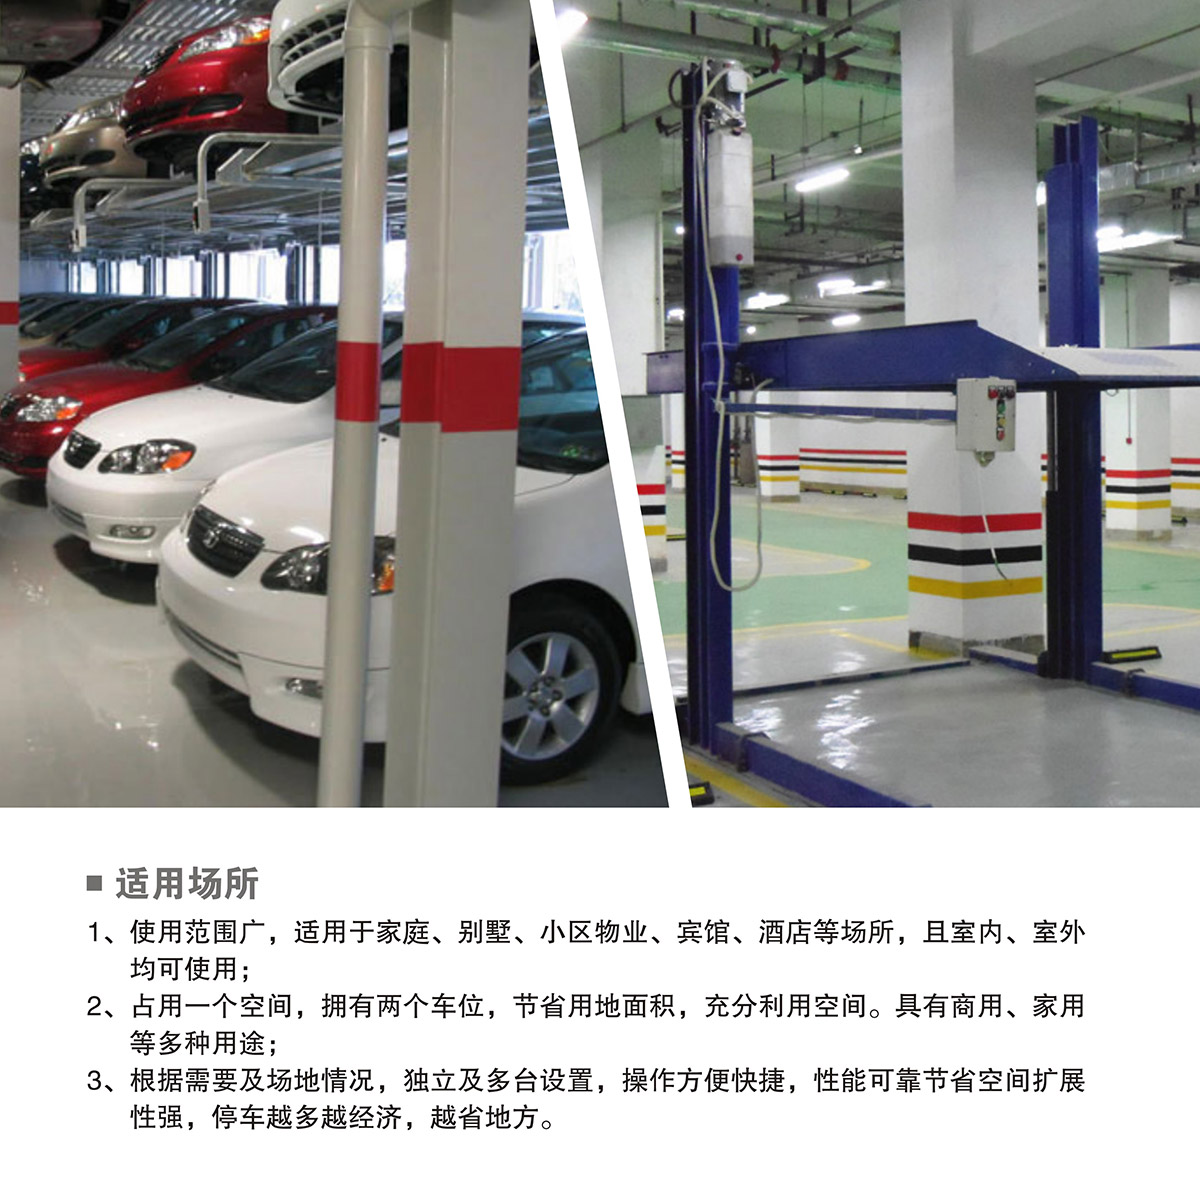 10PJS两柱简易升降机械式立体停车设备适用场所.jpg